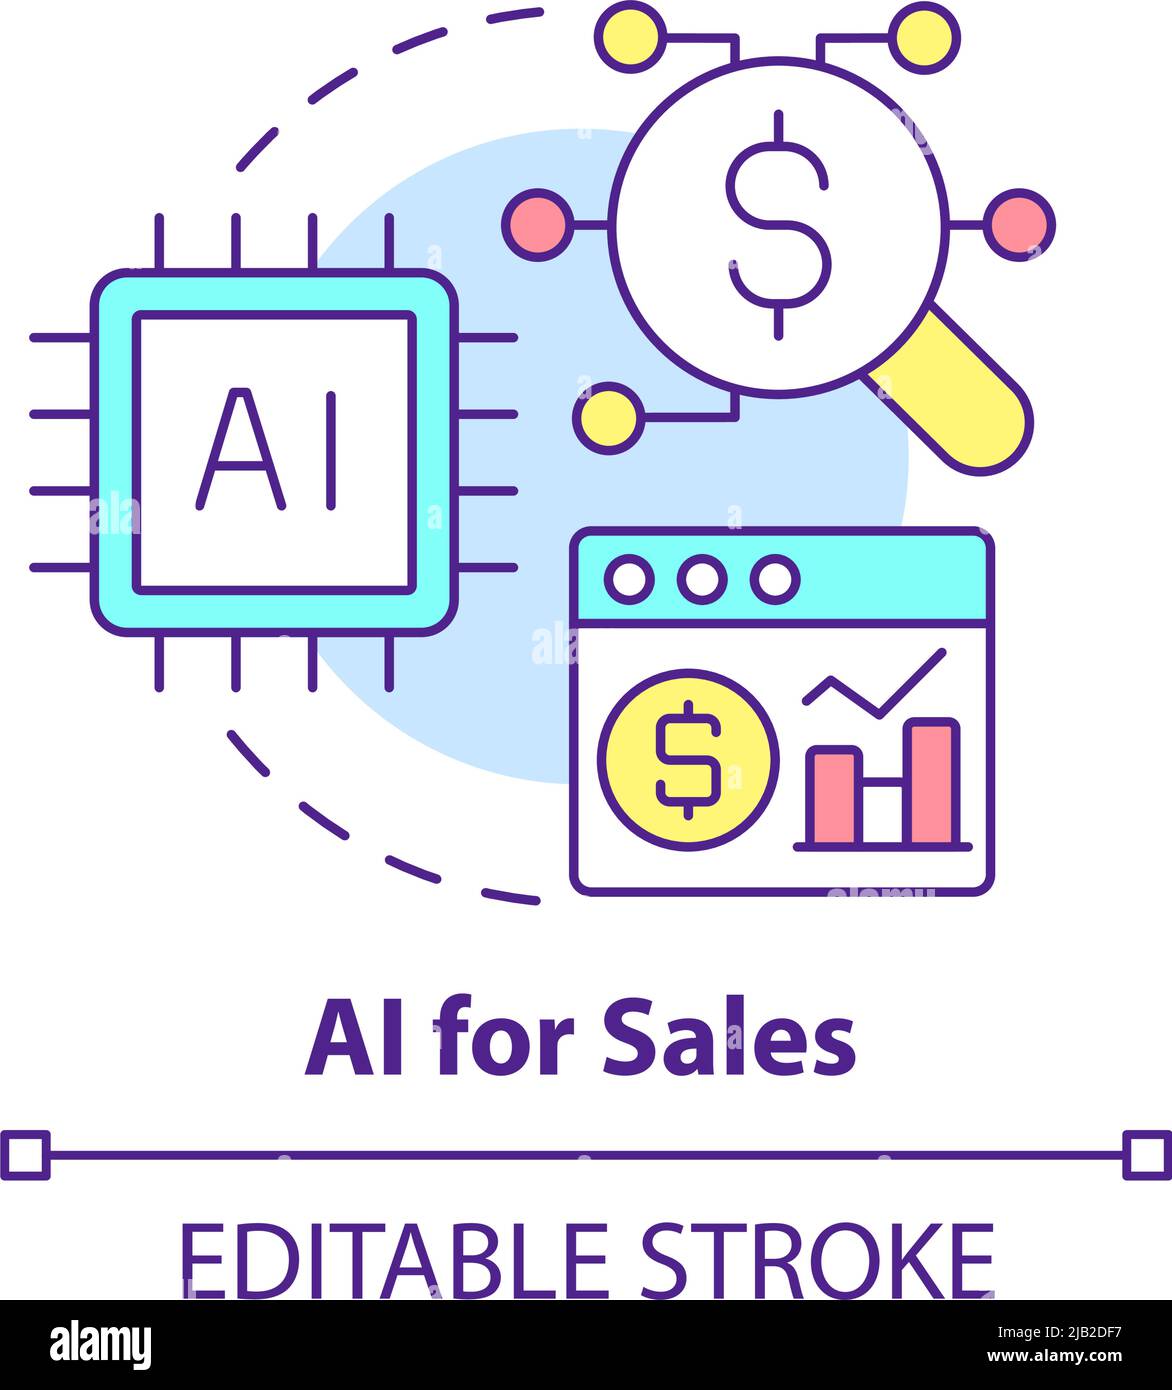 AI for sales concept icon Stock Vector